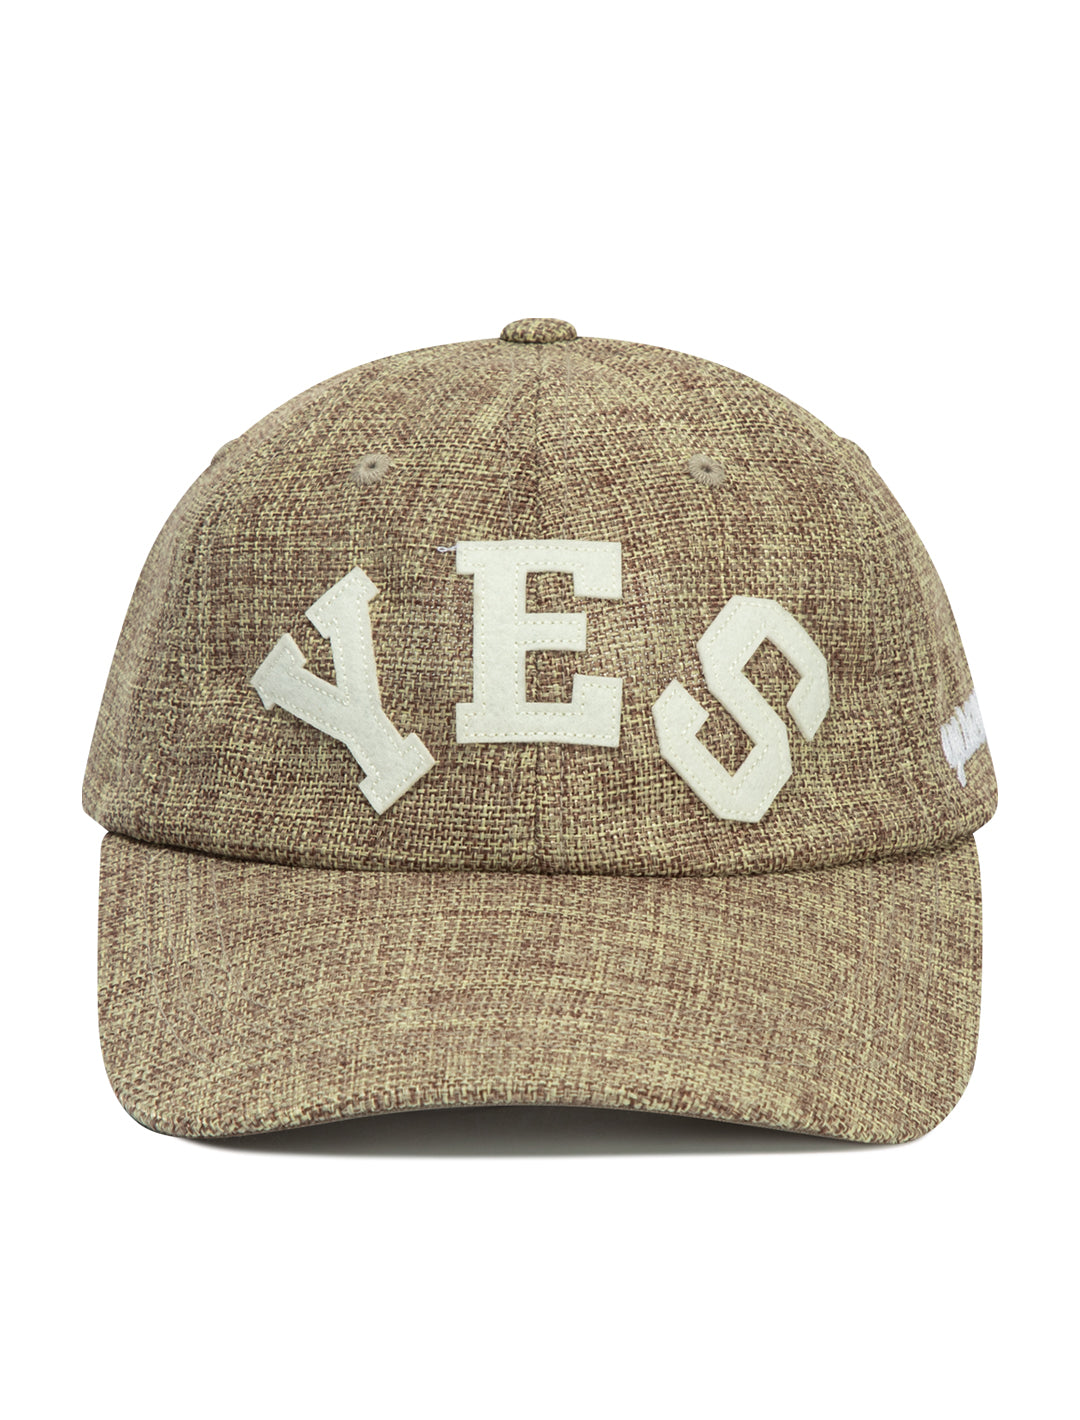 Y.E.S Straw Cap